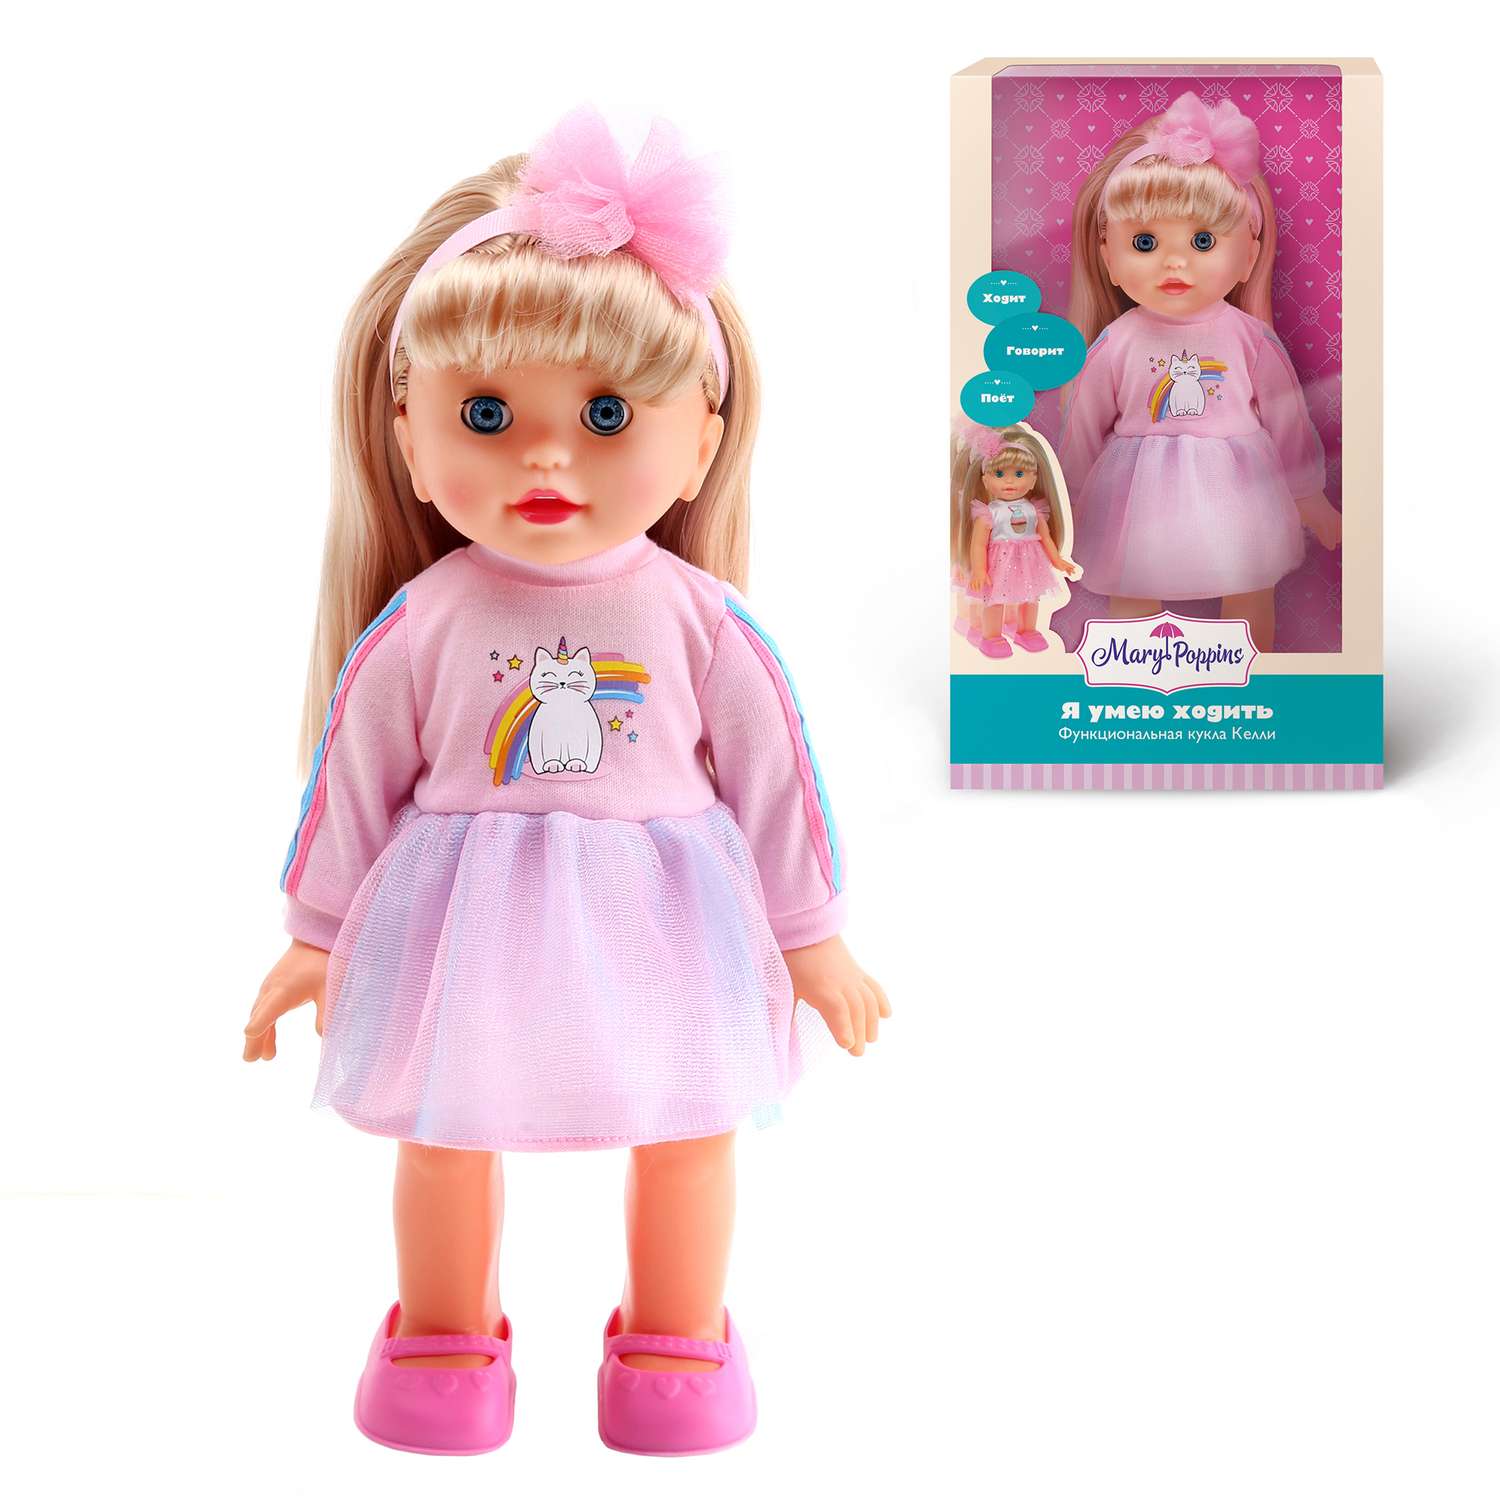 Кукла для девочки Mary Poppins интерактивная. Ходит 451353 - фото 1